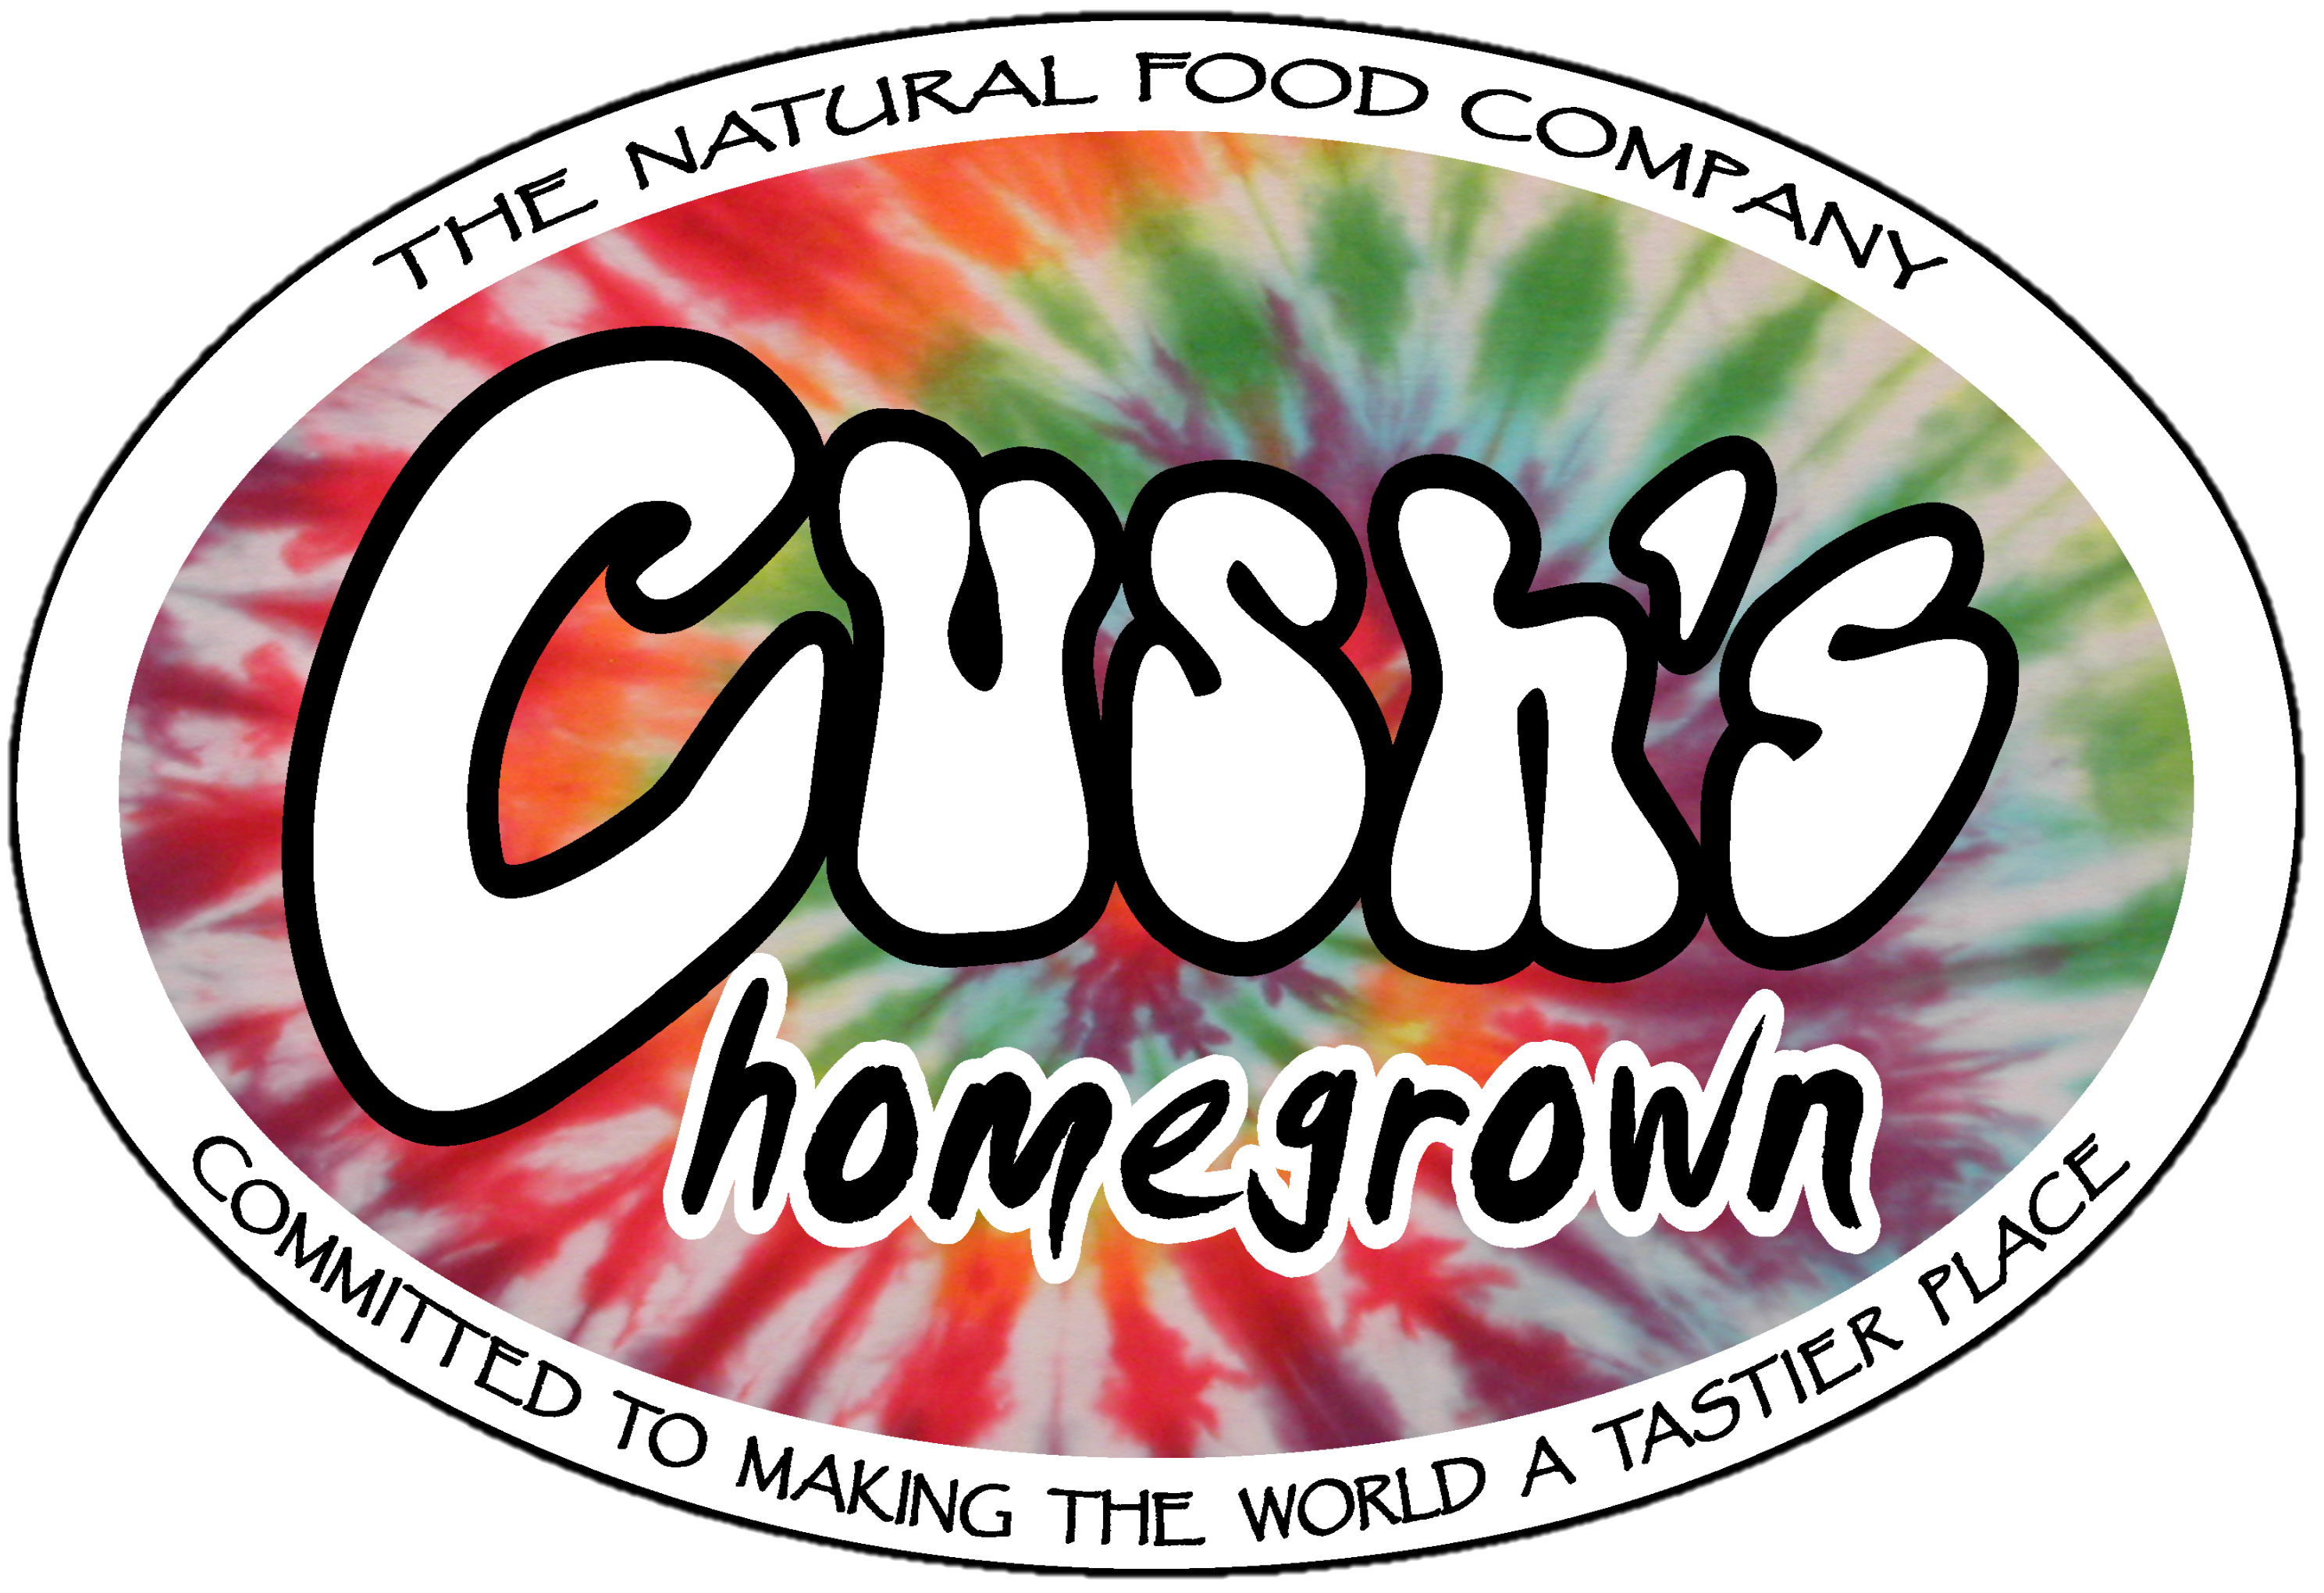 Cush's Homegrown Logo